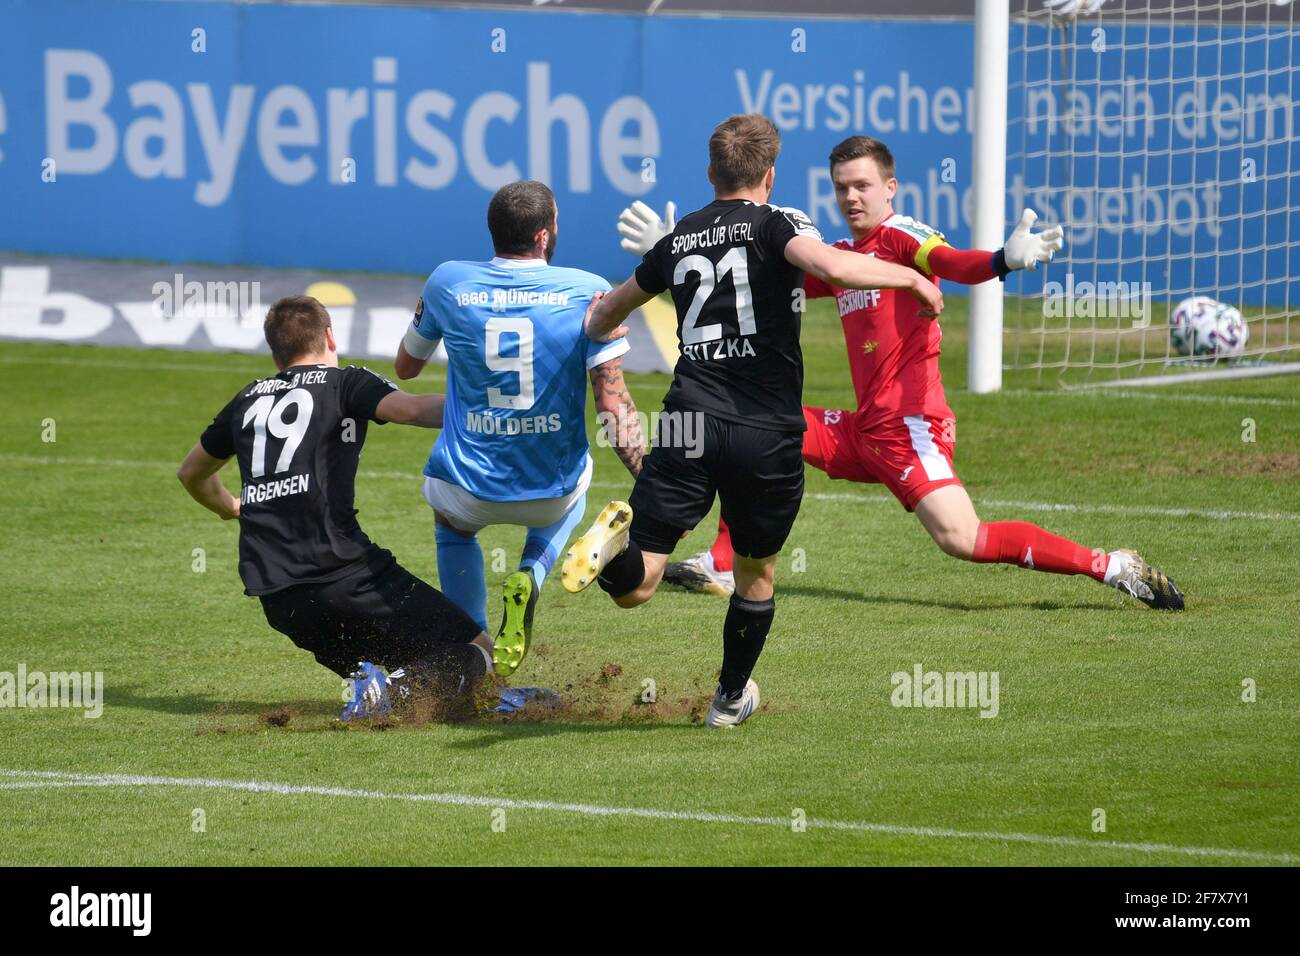 goalchance Sascha MOELDERS (TSV Munich 1860) action, duels versus Lasse  JUERGENSEN (Verl) and Lars RITZKA (Verl), hi: goalwart Robin BRUESEKE (Verl).  Soccer 3rd league, Liga3, TSV Munich 1860 - SC Verl on